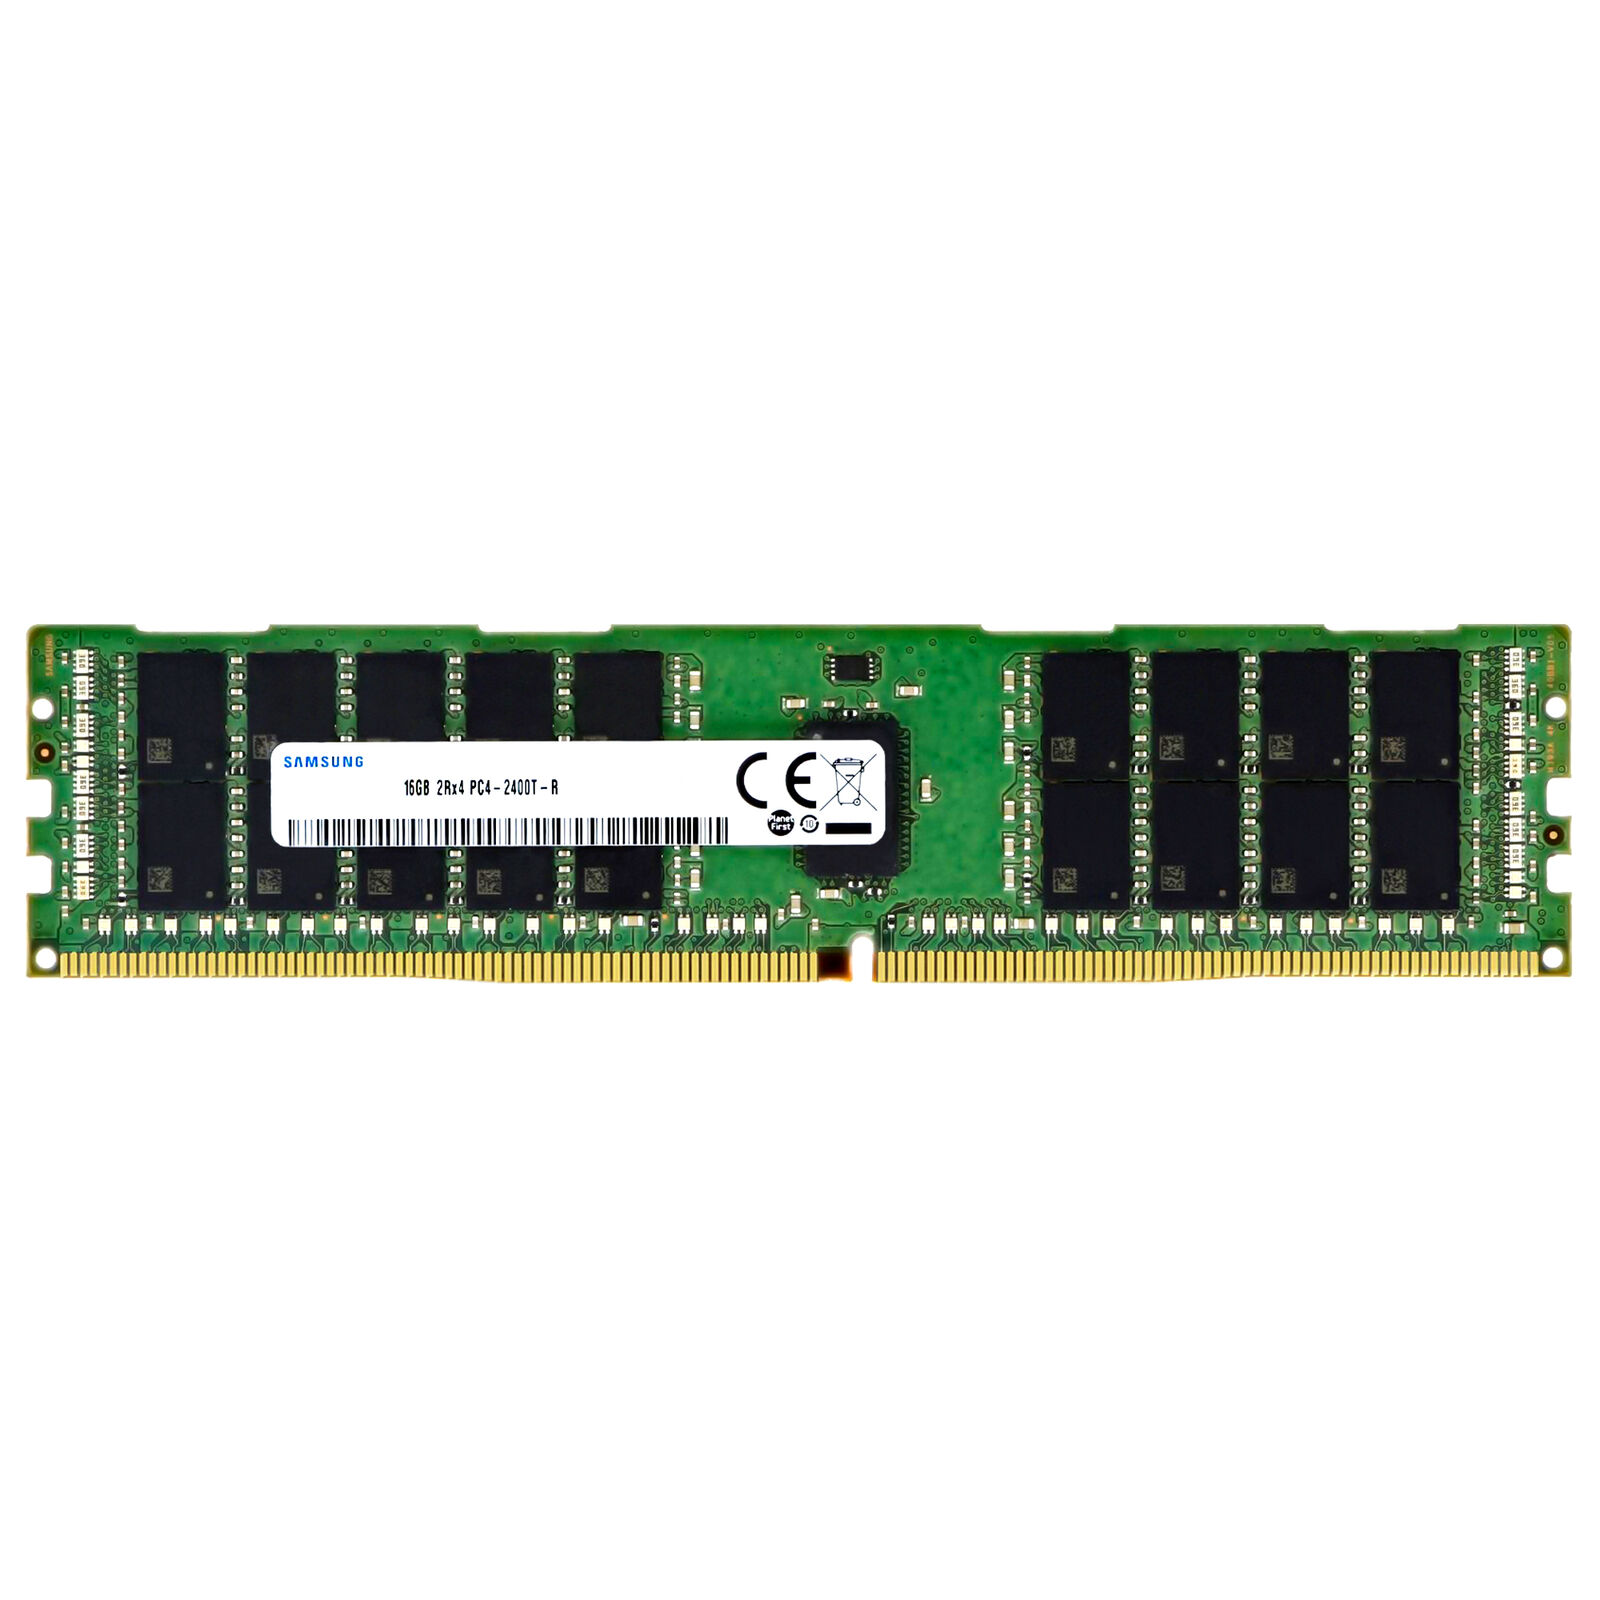 Samsung 16GB 2Rx4 PC4-2400 RDIMM DDR4-19200 ECC REG Registered Server Memory RAM